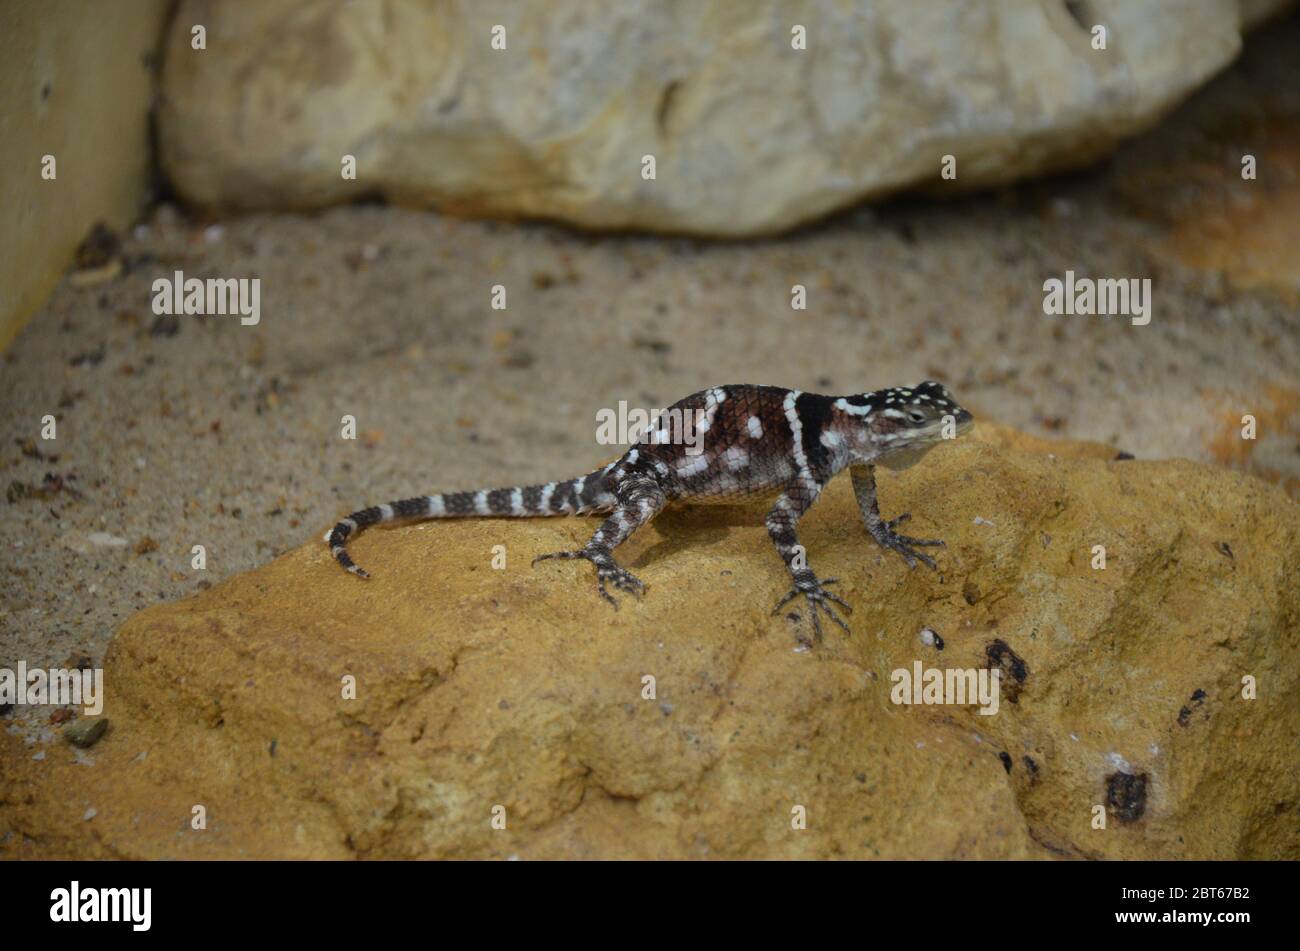 Sagebrush lizard on the rock Stock Photo